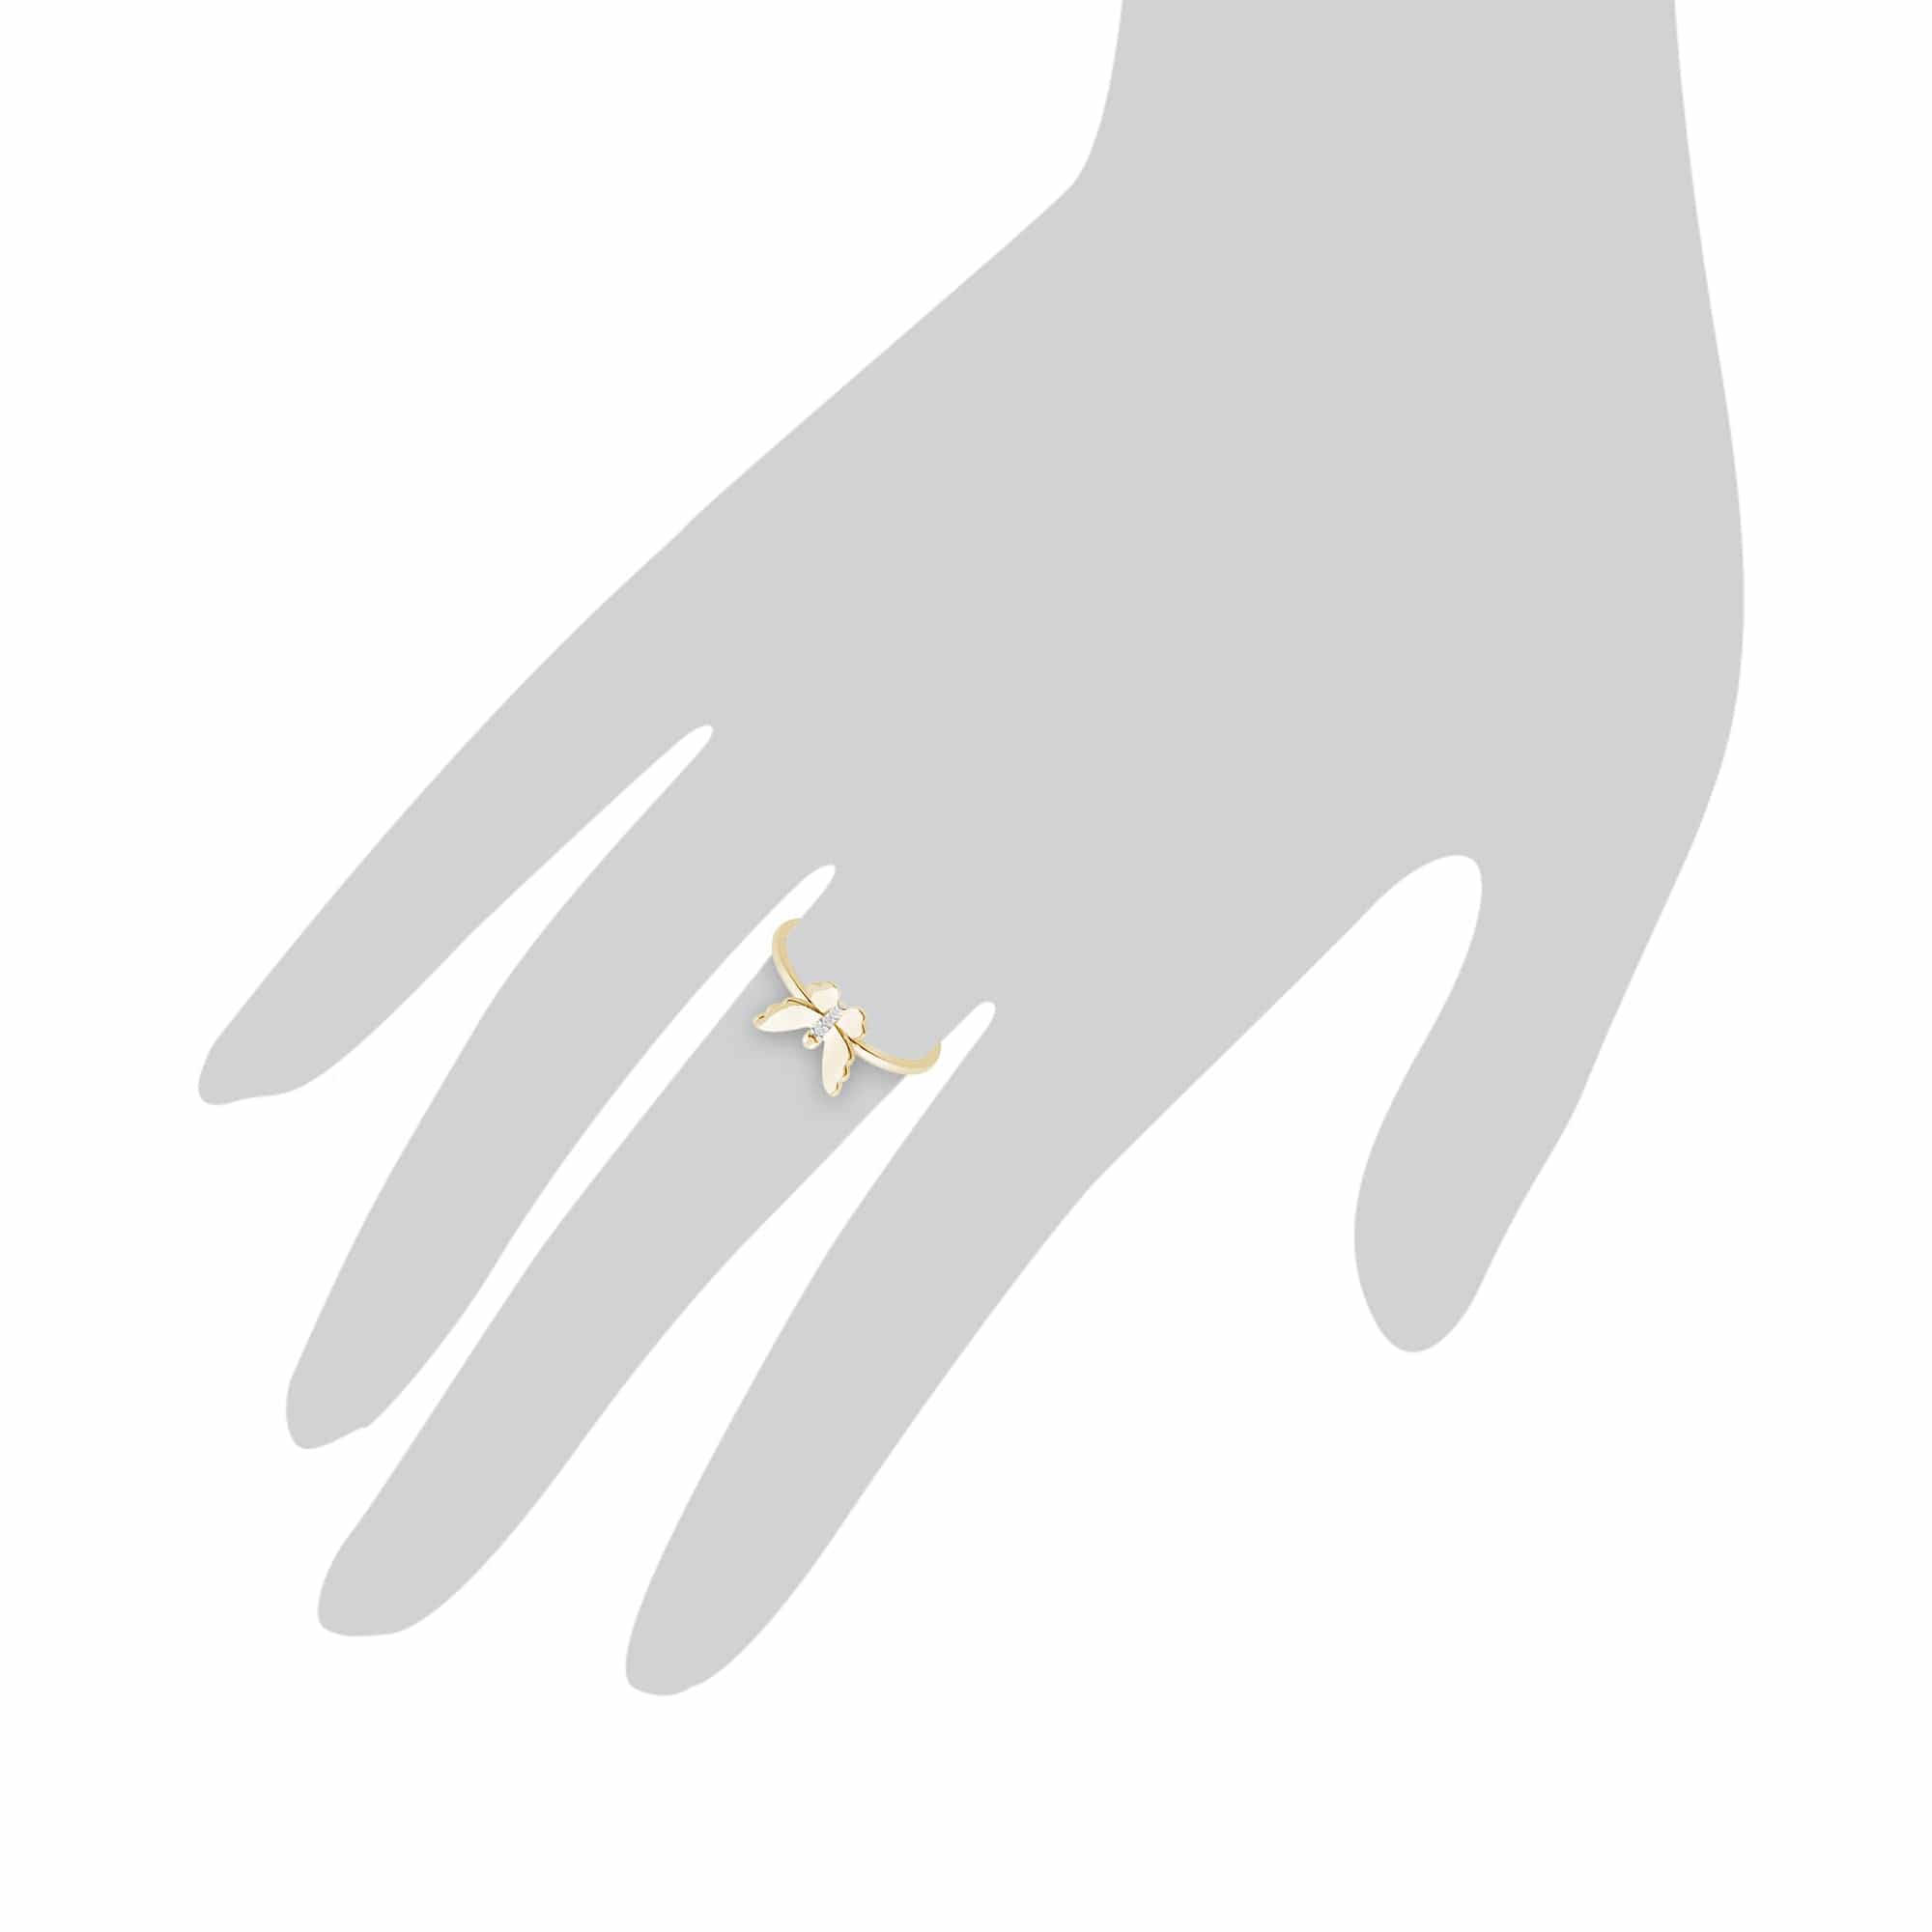 191R0886019 Gemondo 9ct Yellow Gold 0.01ct Diamond Butterfly Ring 3